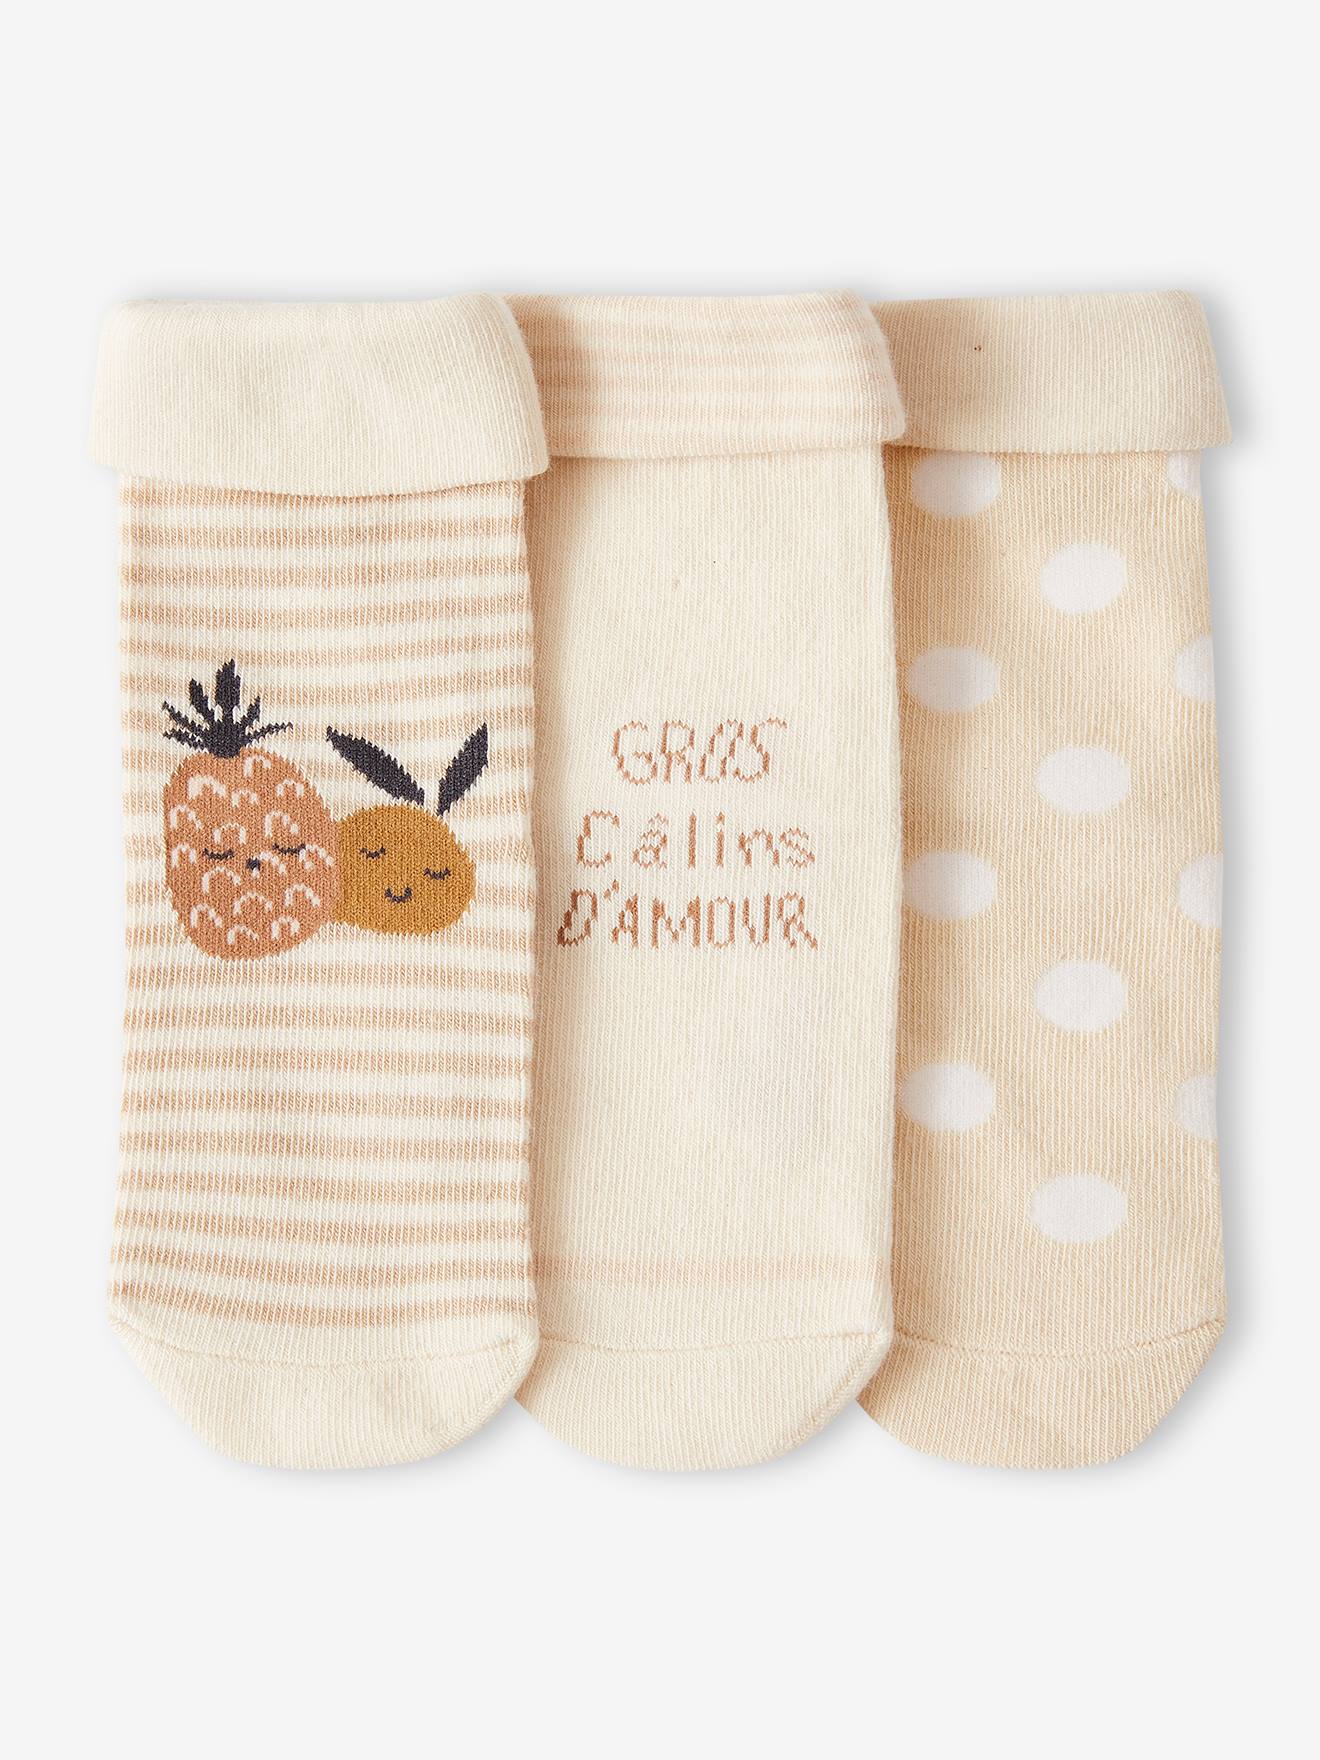 Pack of 3 Pairs of "Pineapple" Socks for Babies sandy beige